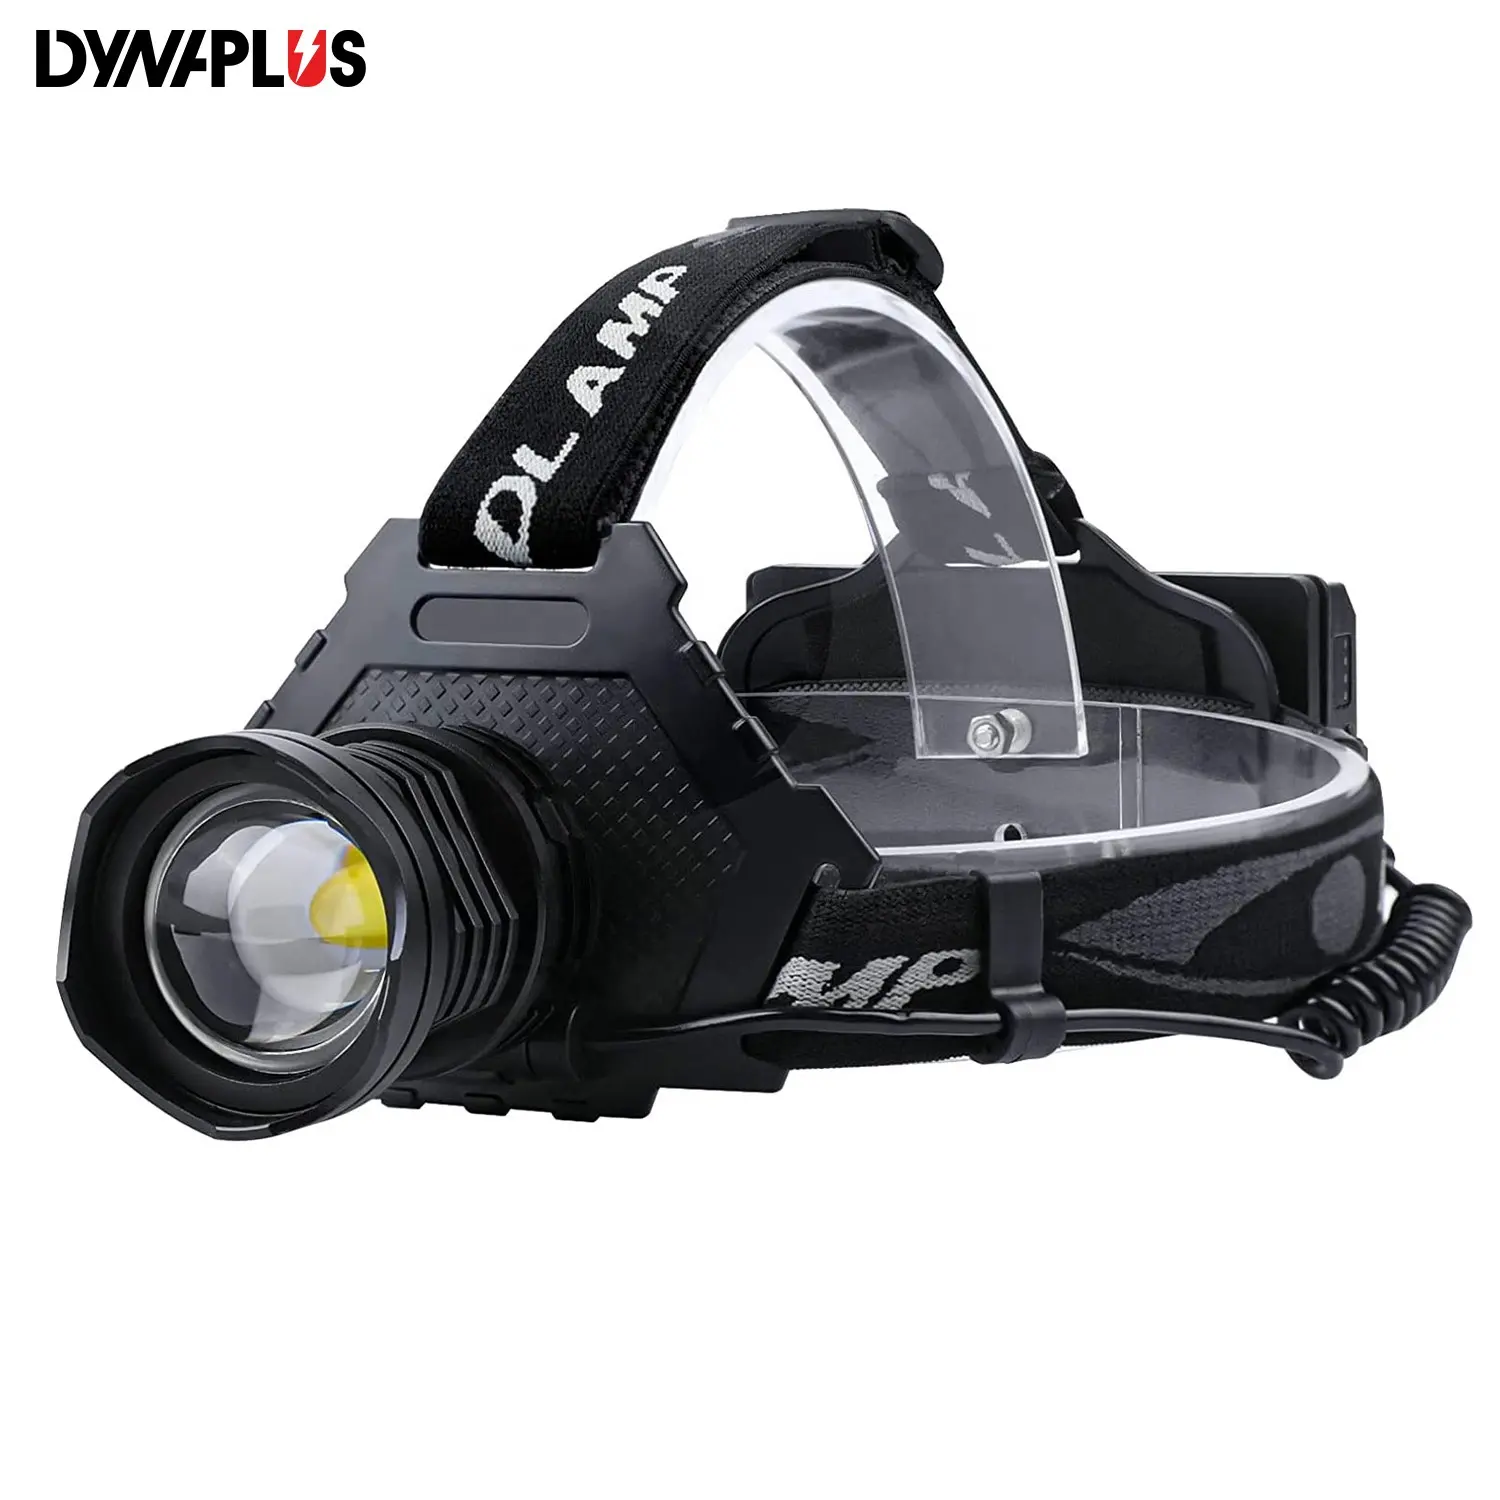 10w Xhp 800lm high power cob led headlamp sensor headlight head flashlight usb rechargeable induction Headlamp for hiking